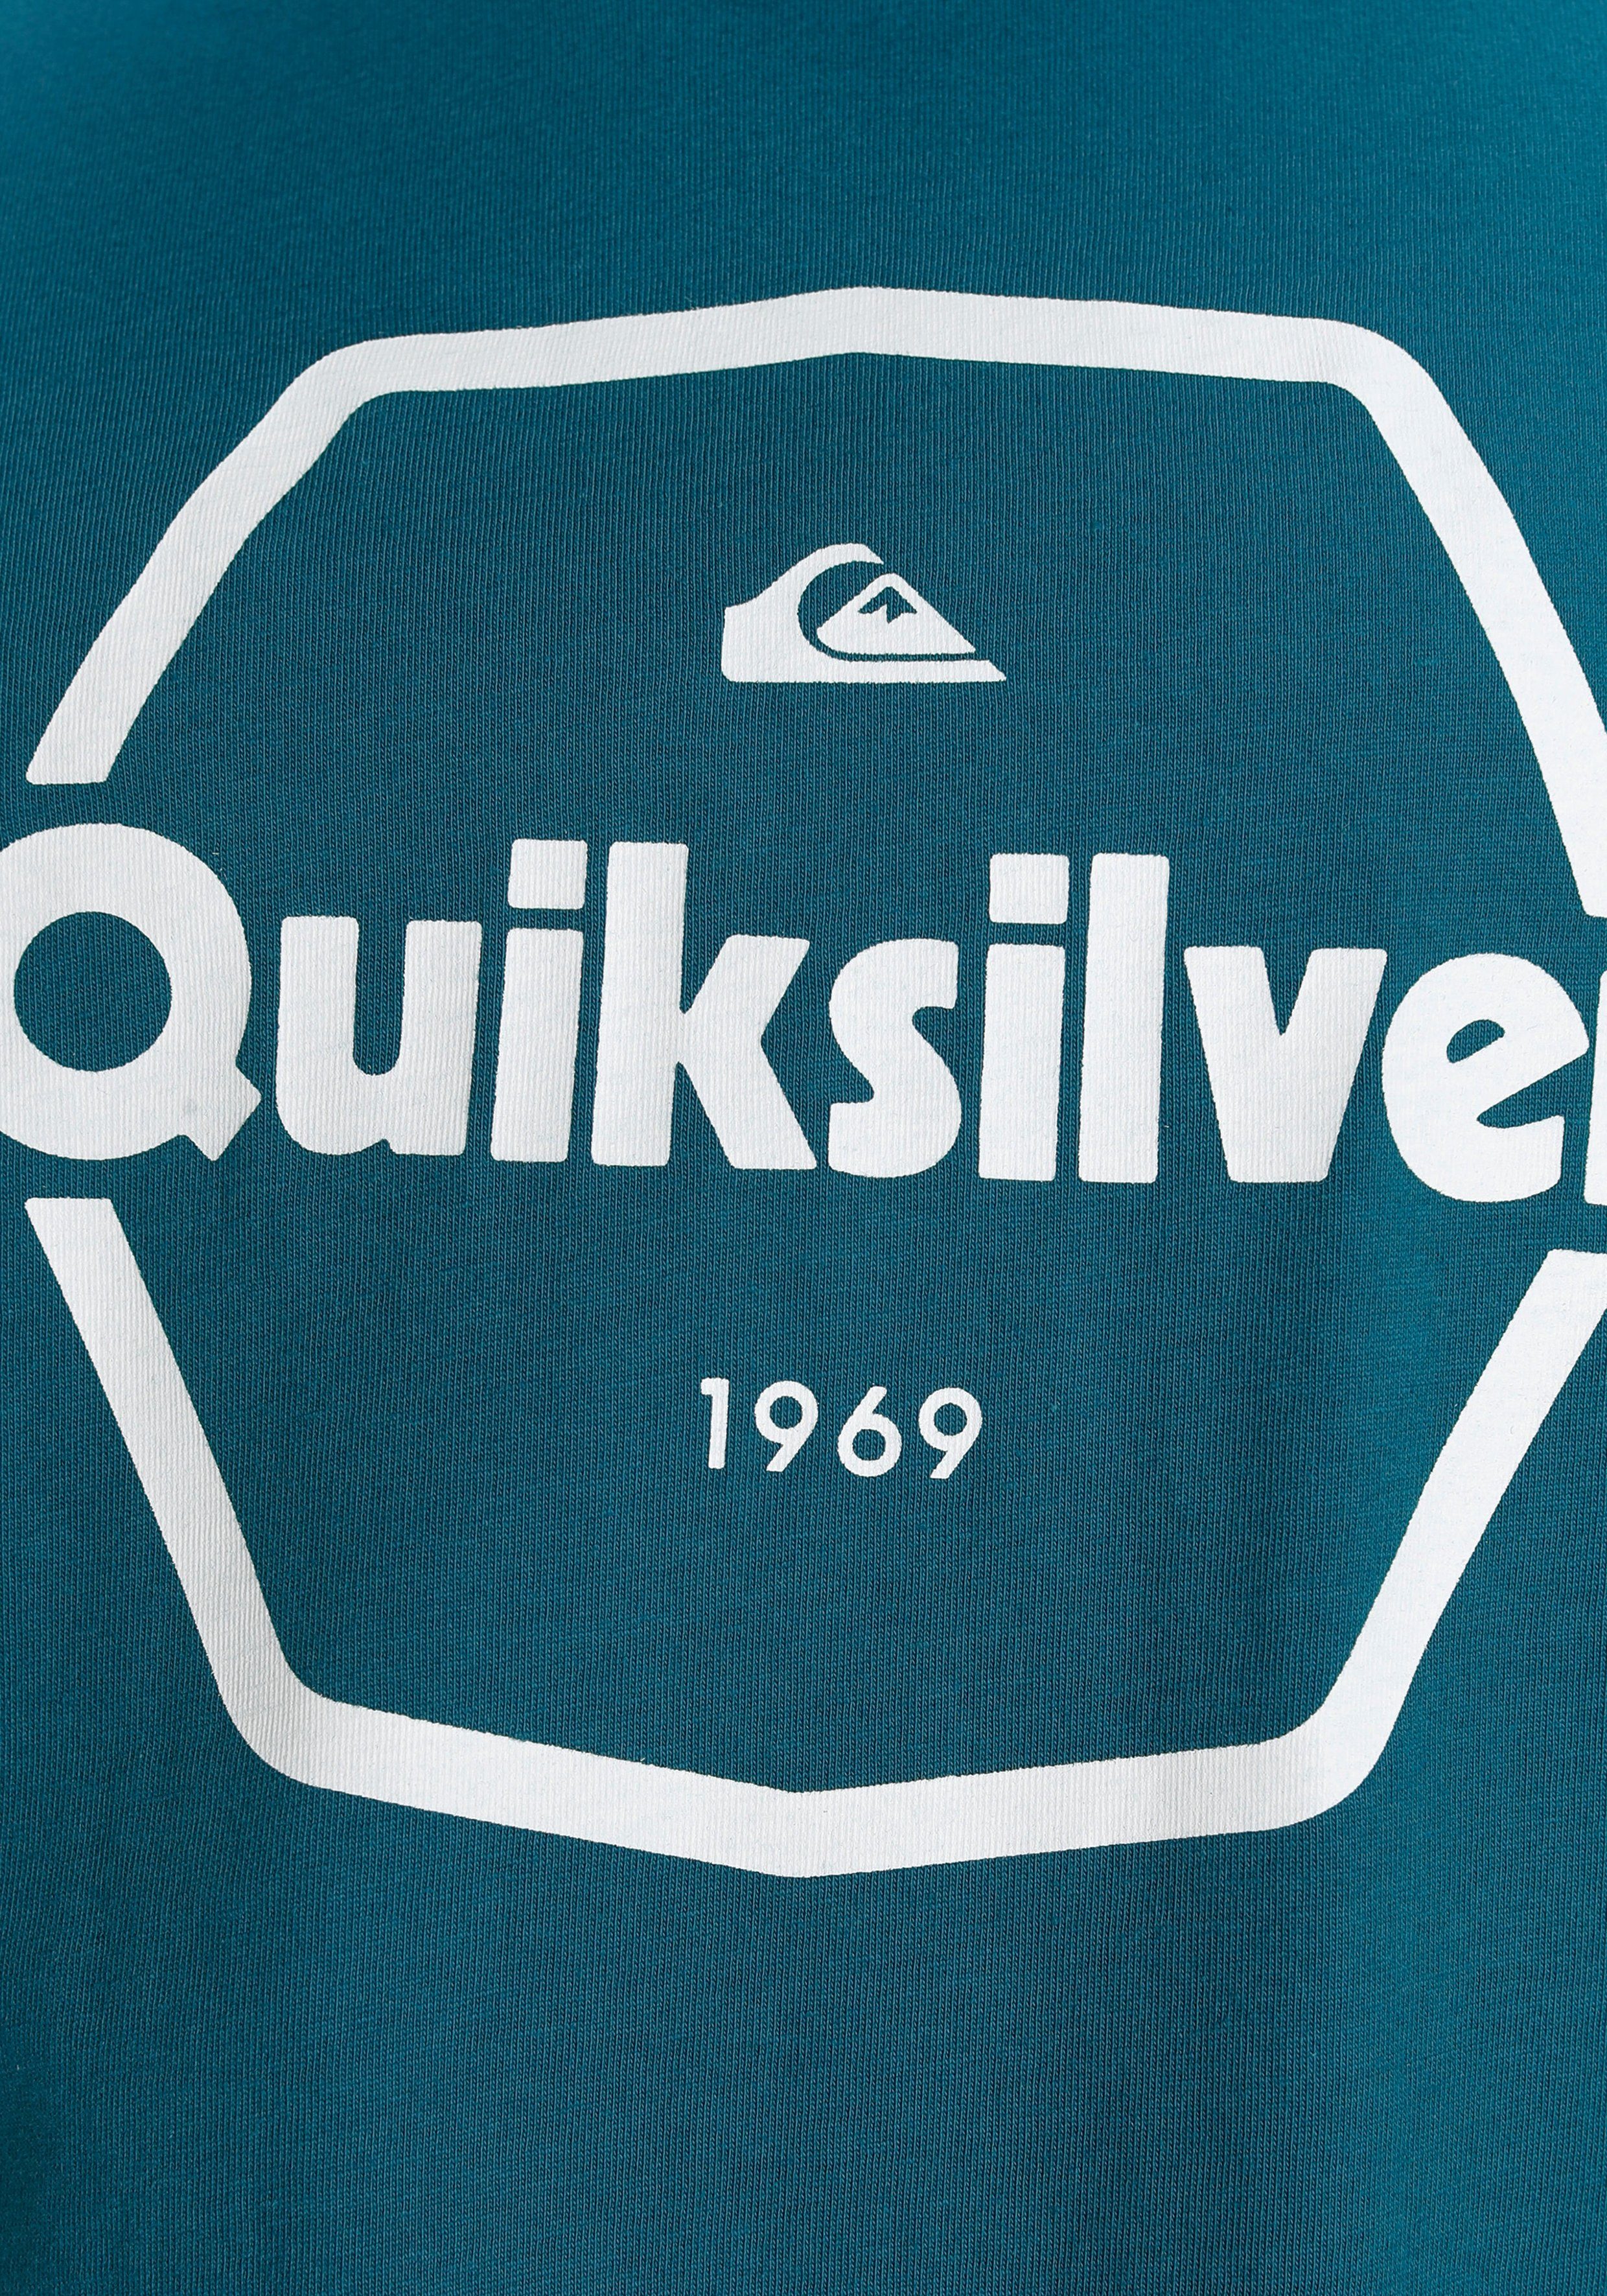 Doppelpack Logodruck 2-tlg) (Packung, mit Quiksilver T-Shirt Jungen